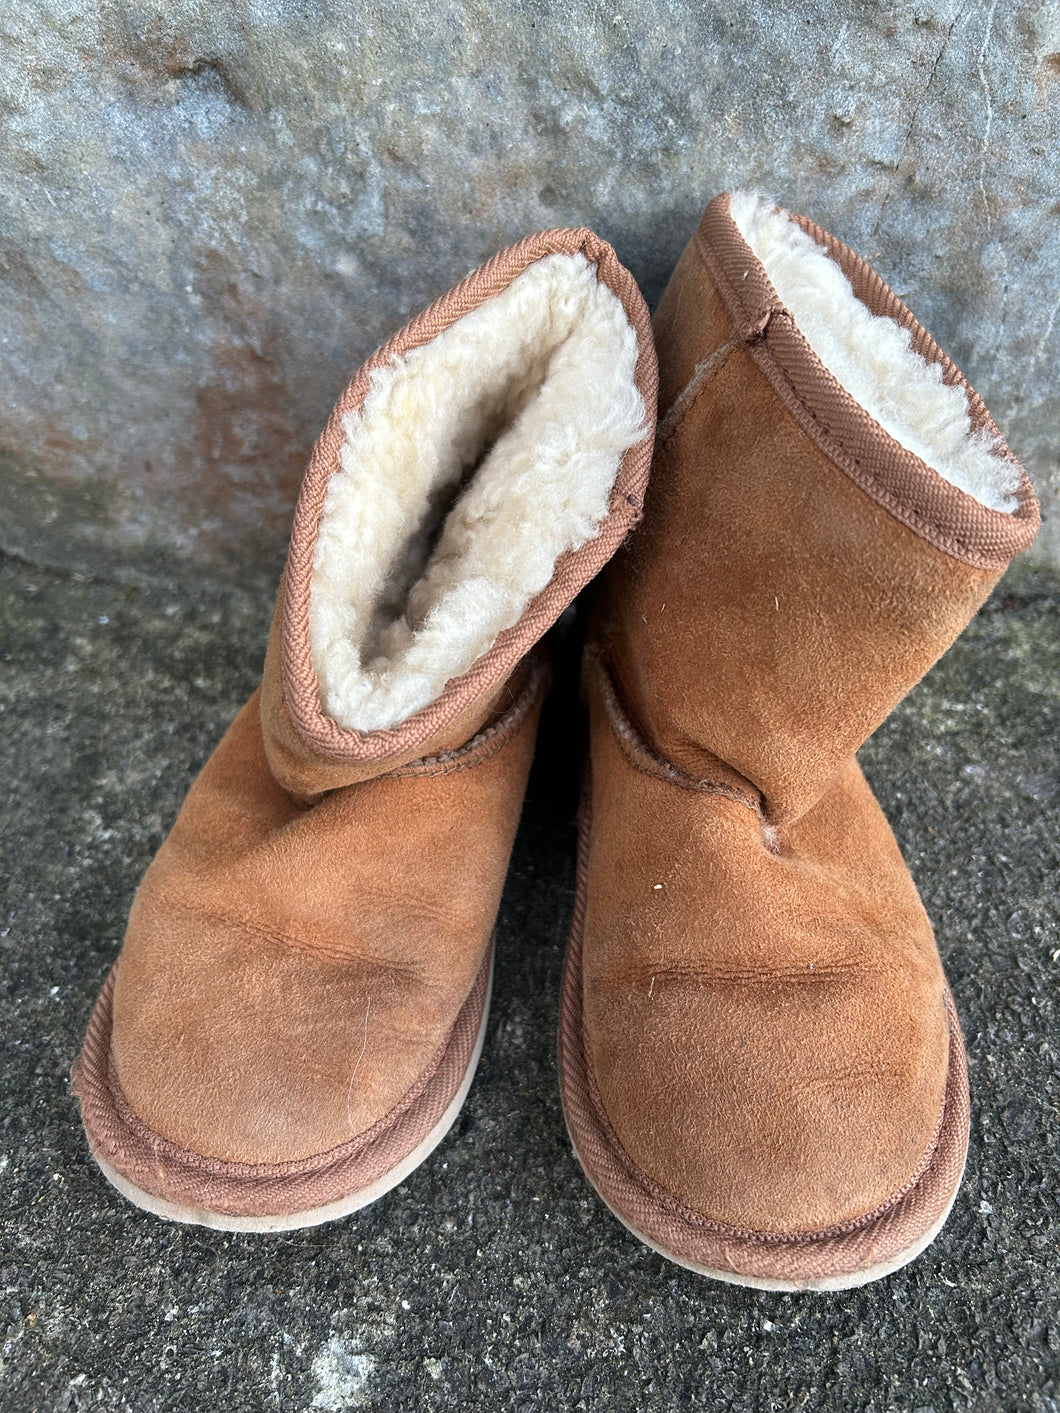 Sheepskin boots  uk 10-10.5 (eu 30-31)